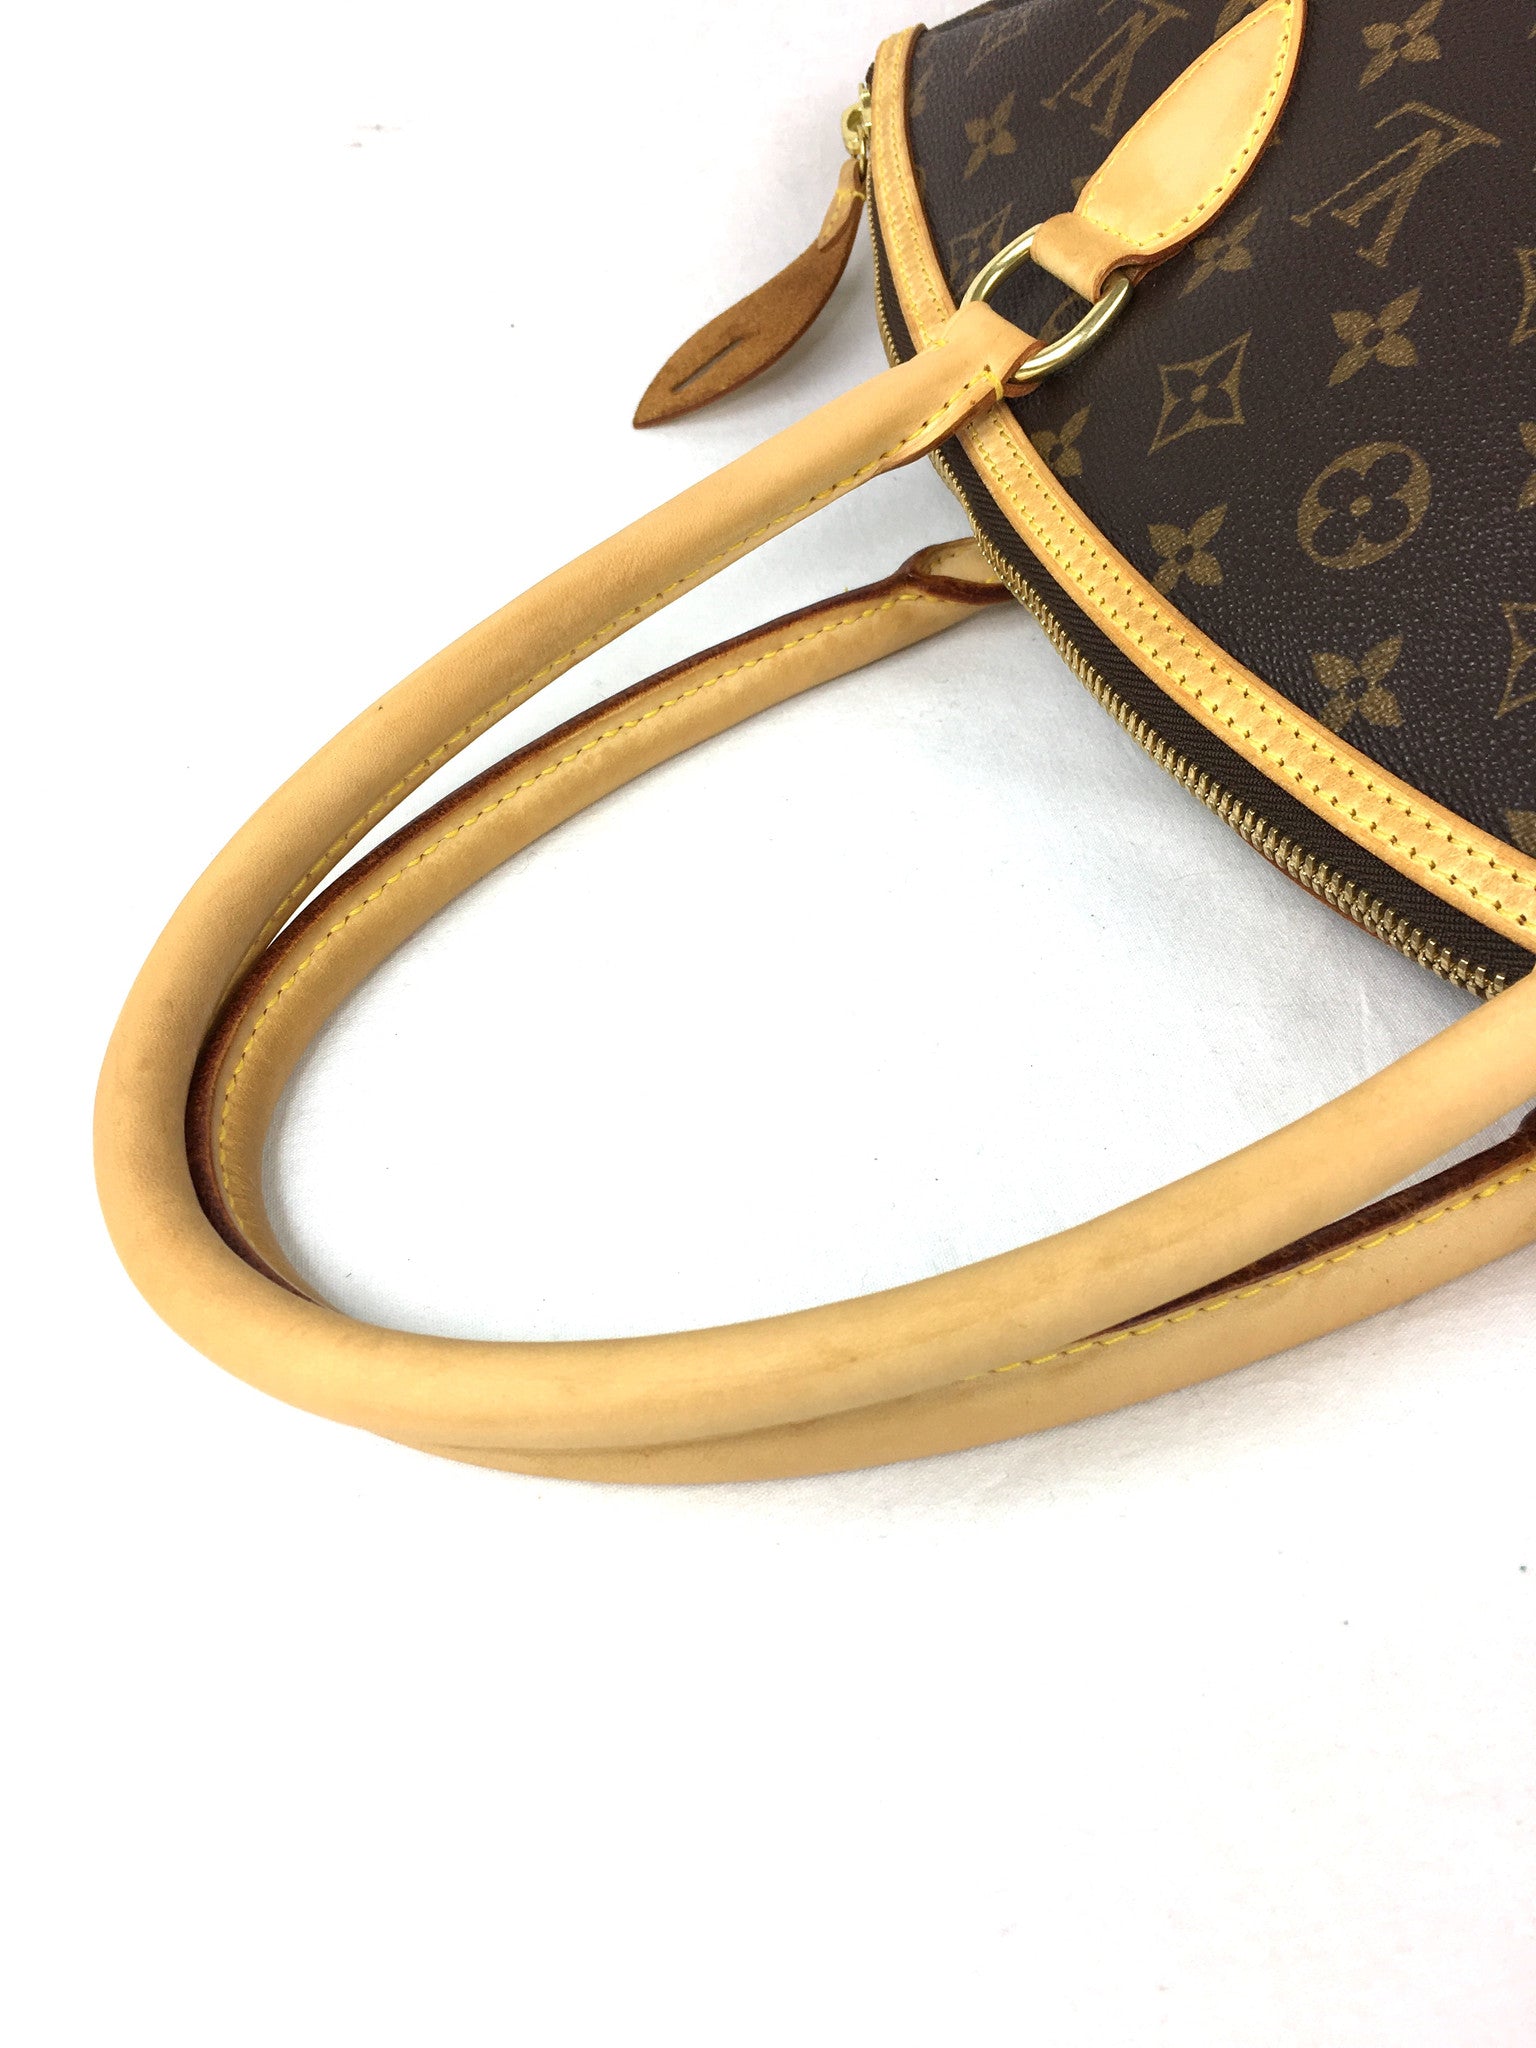 Louis Vuitton Monogram Lockit Horizontal Bag LVJS620 - Bags of